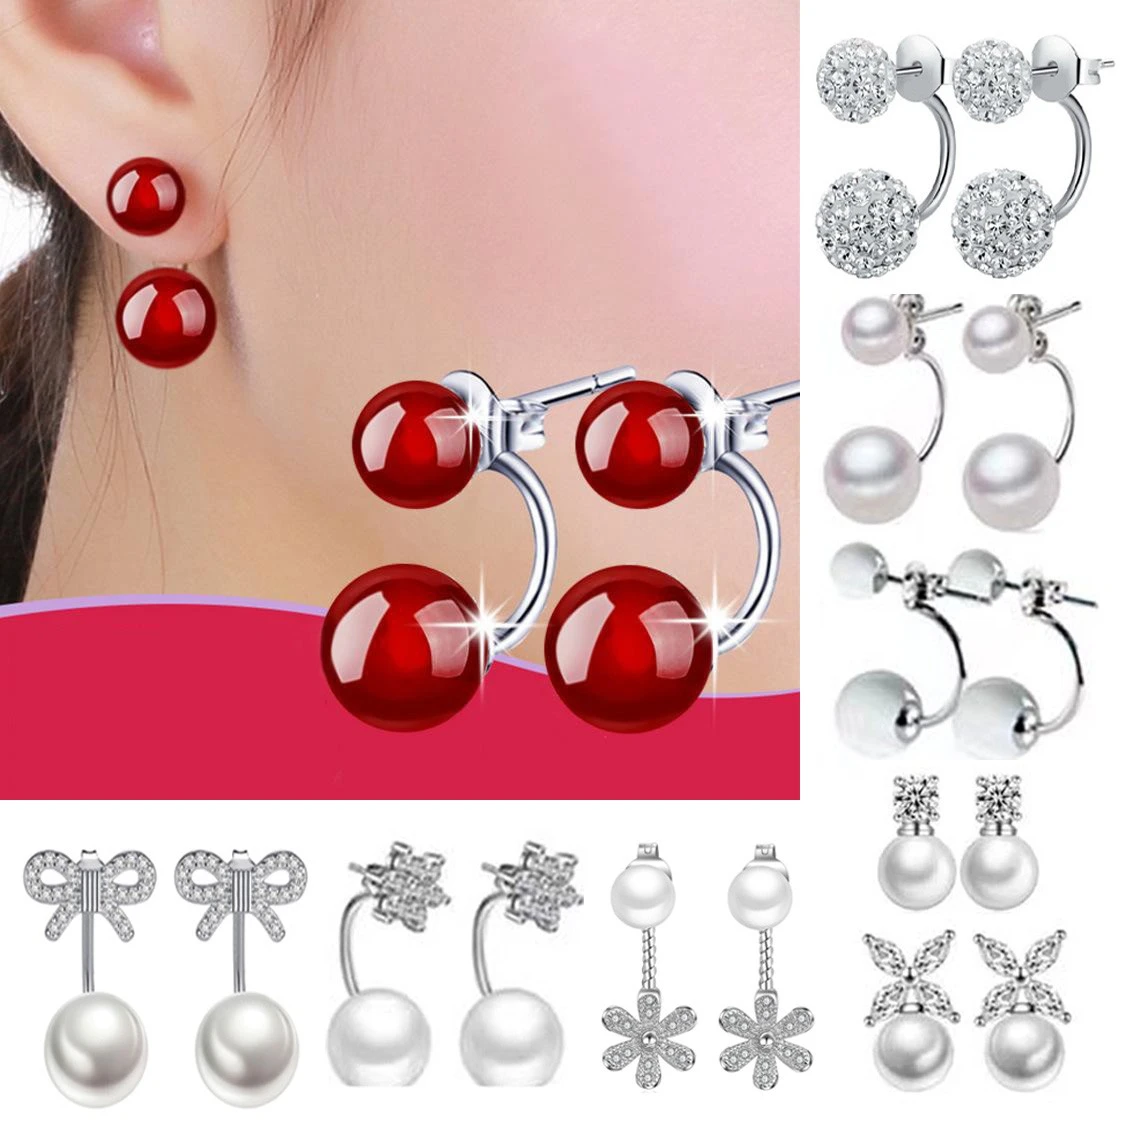 Natural Stone Stud Earrings For Women Silver Color Plated Earing Oorbellen Earings brinco Jewelry Gift earrings Wholesale